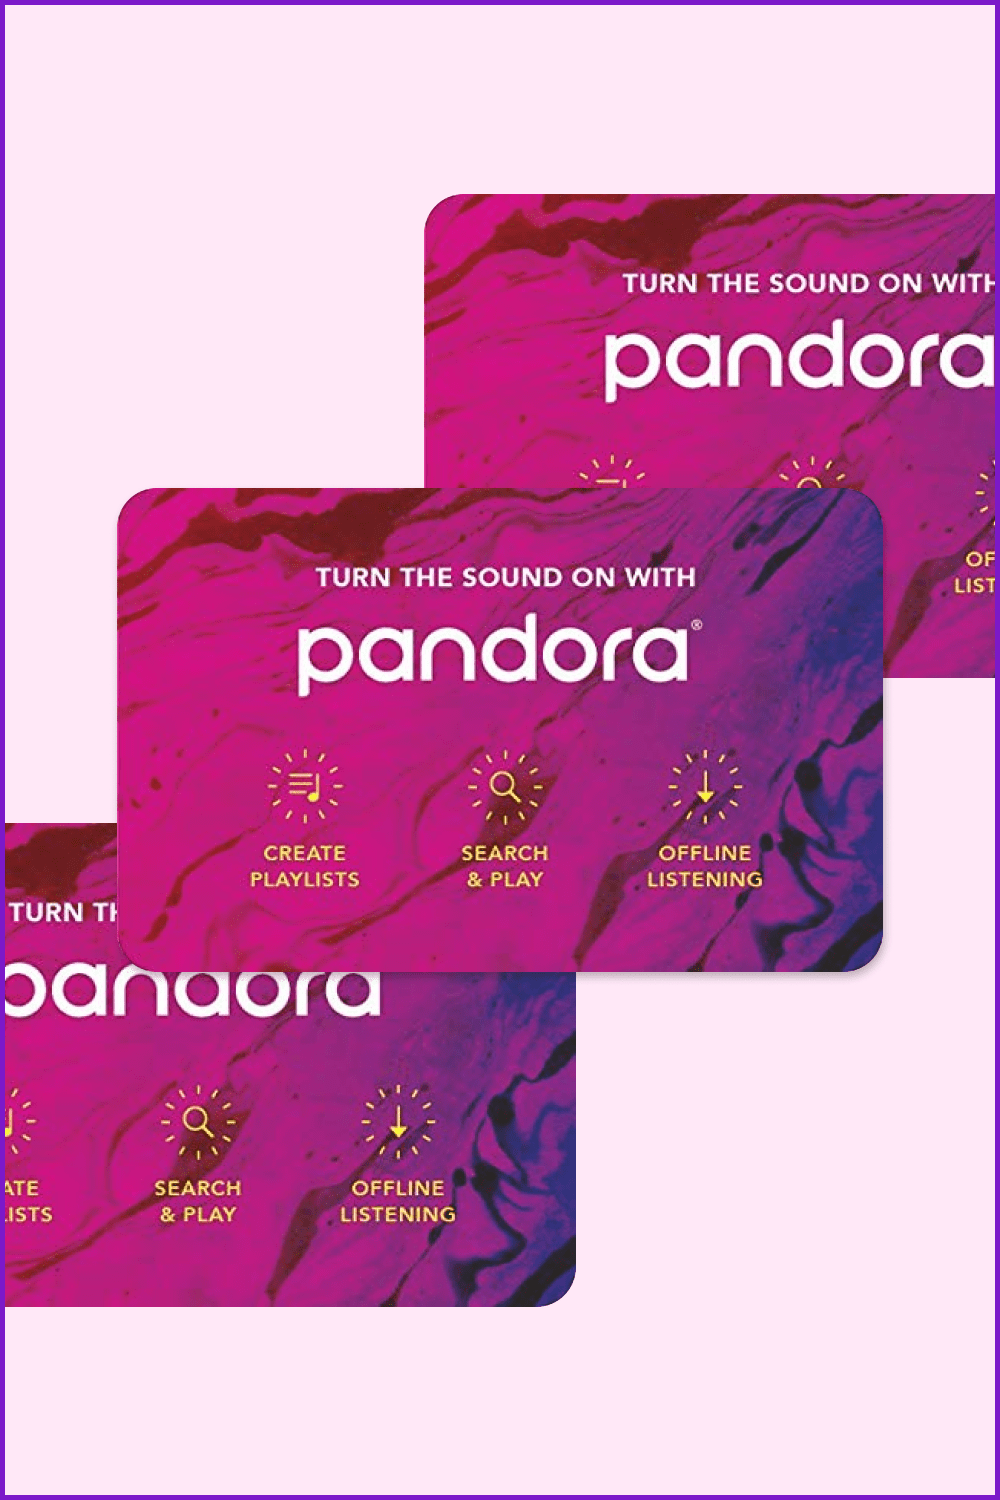 Pandora gift card images.